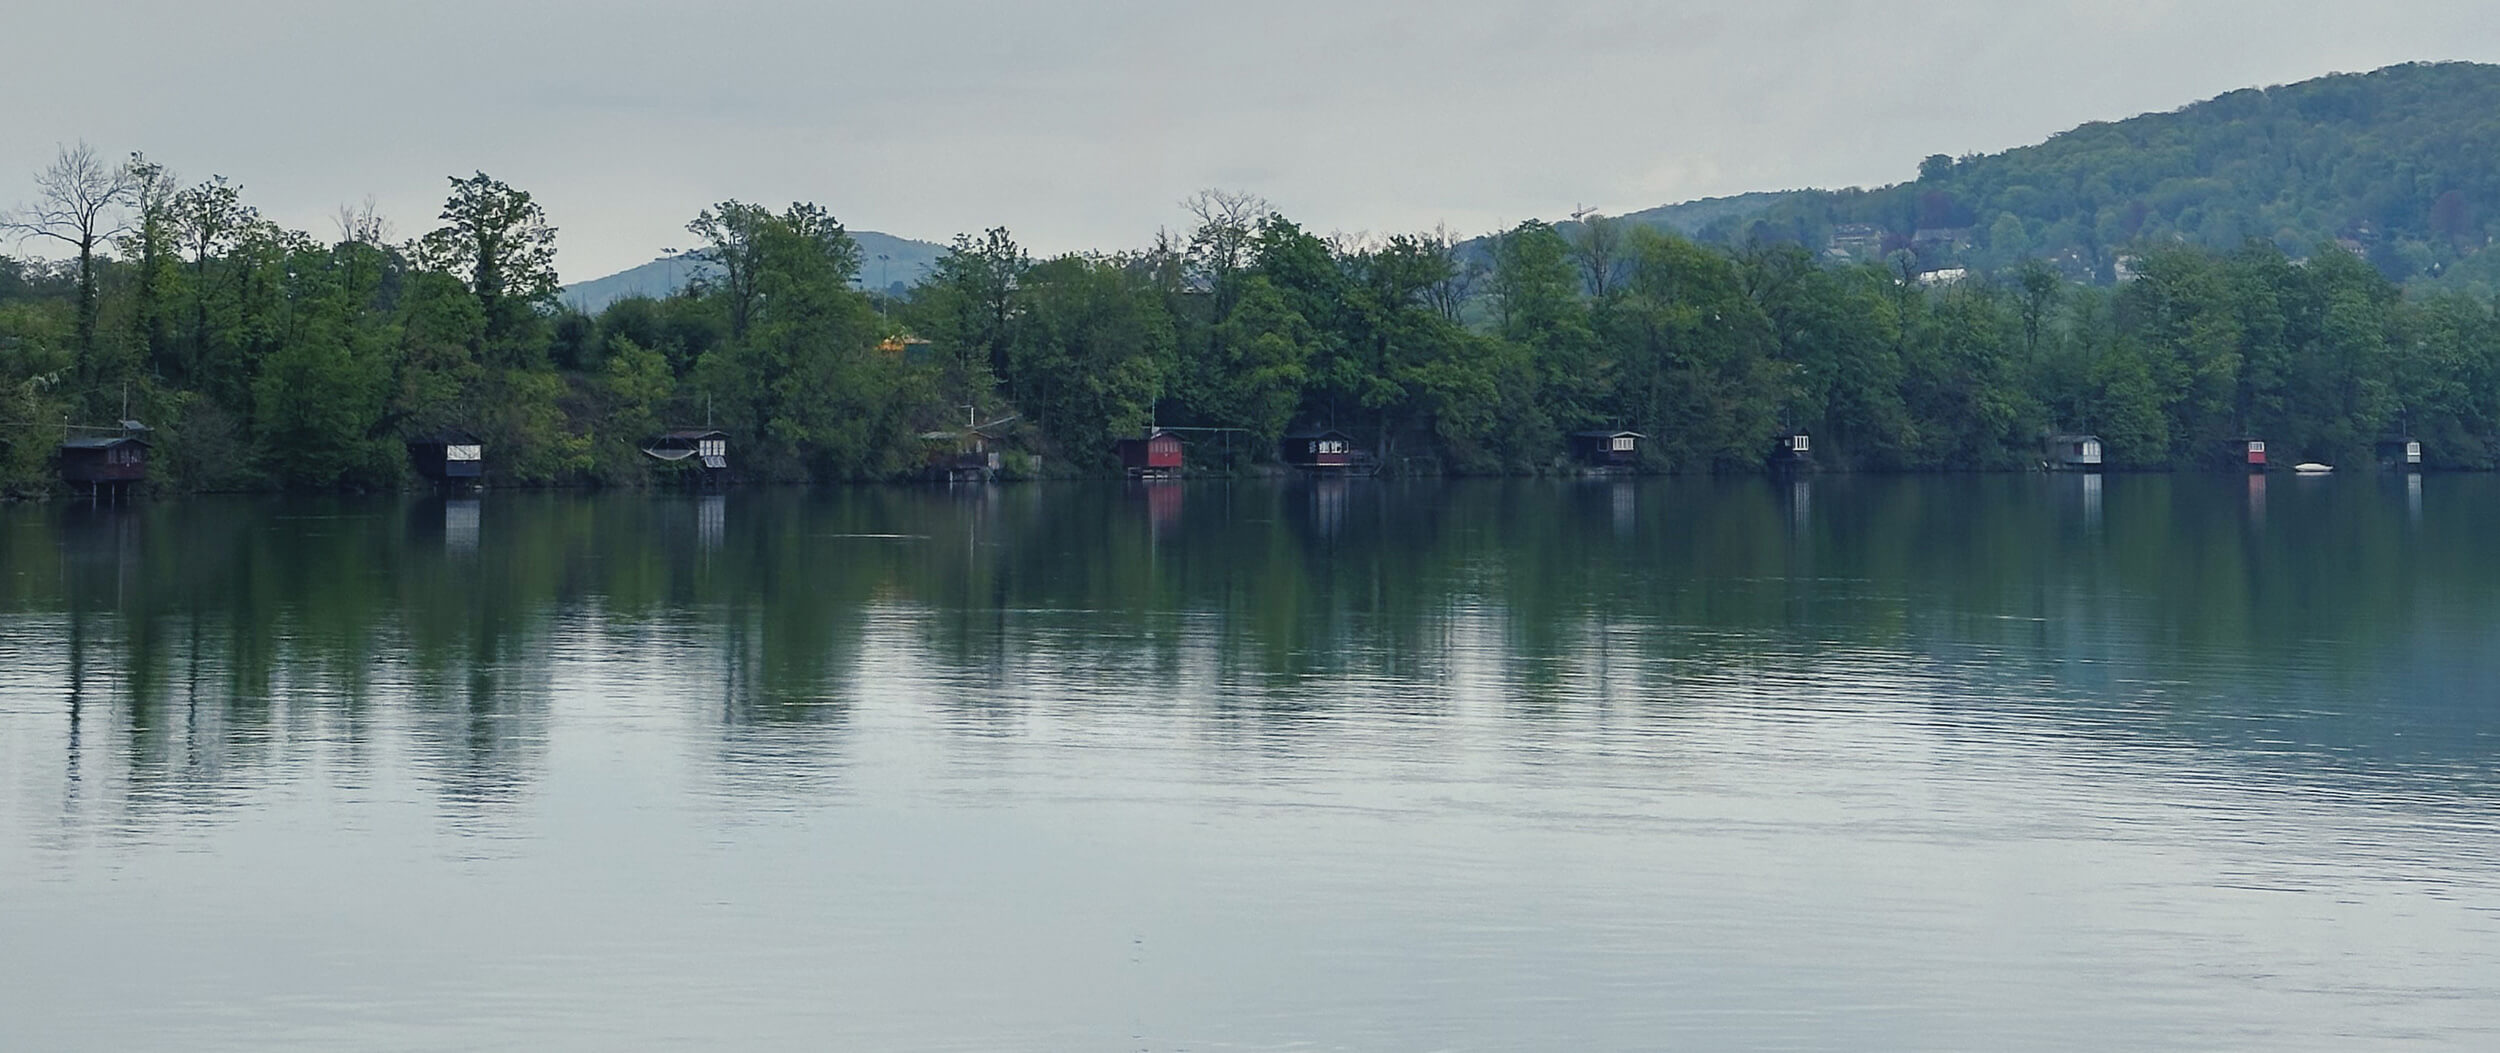 Matthias Maier | Stories | Week 16 | Fishing huts on the Rhine river